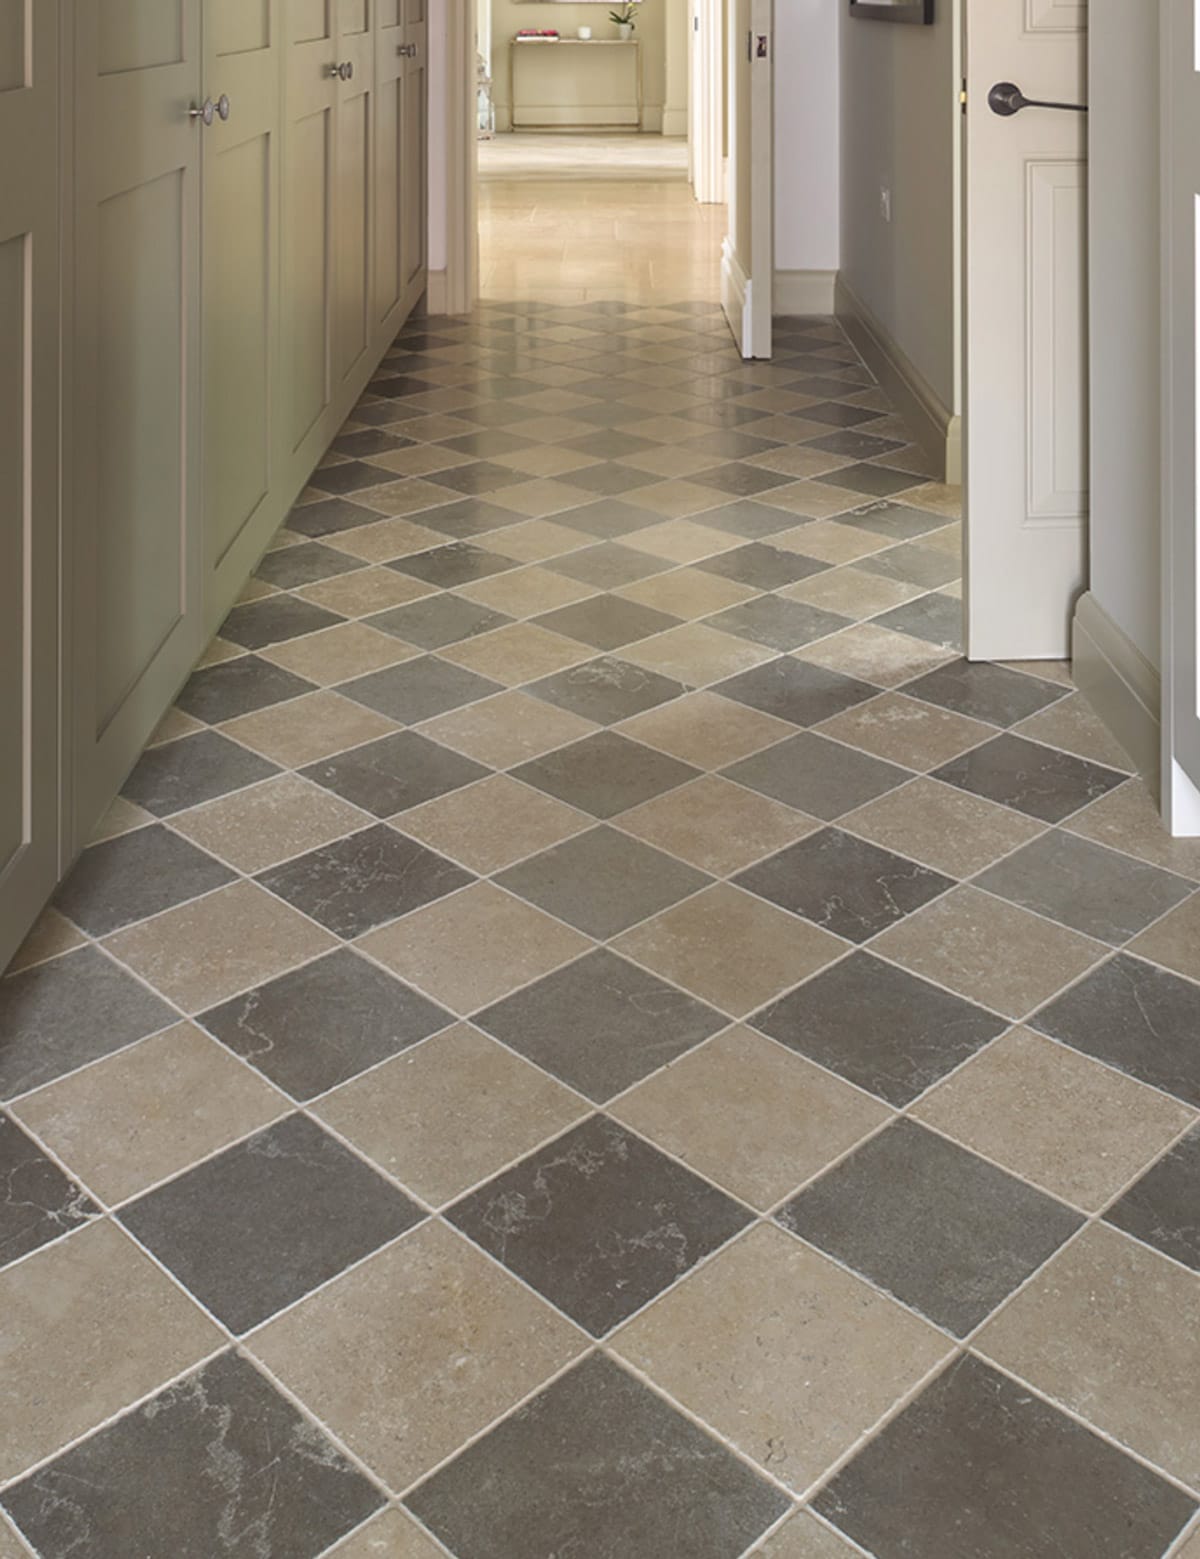 ceramic floor tiles in gray and creamy beige colors in a hallway